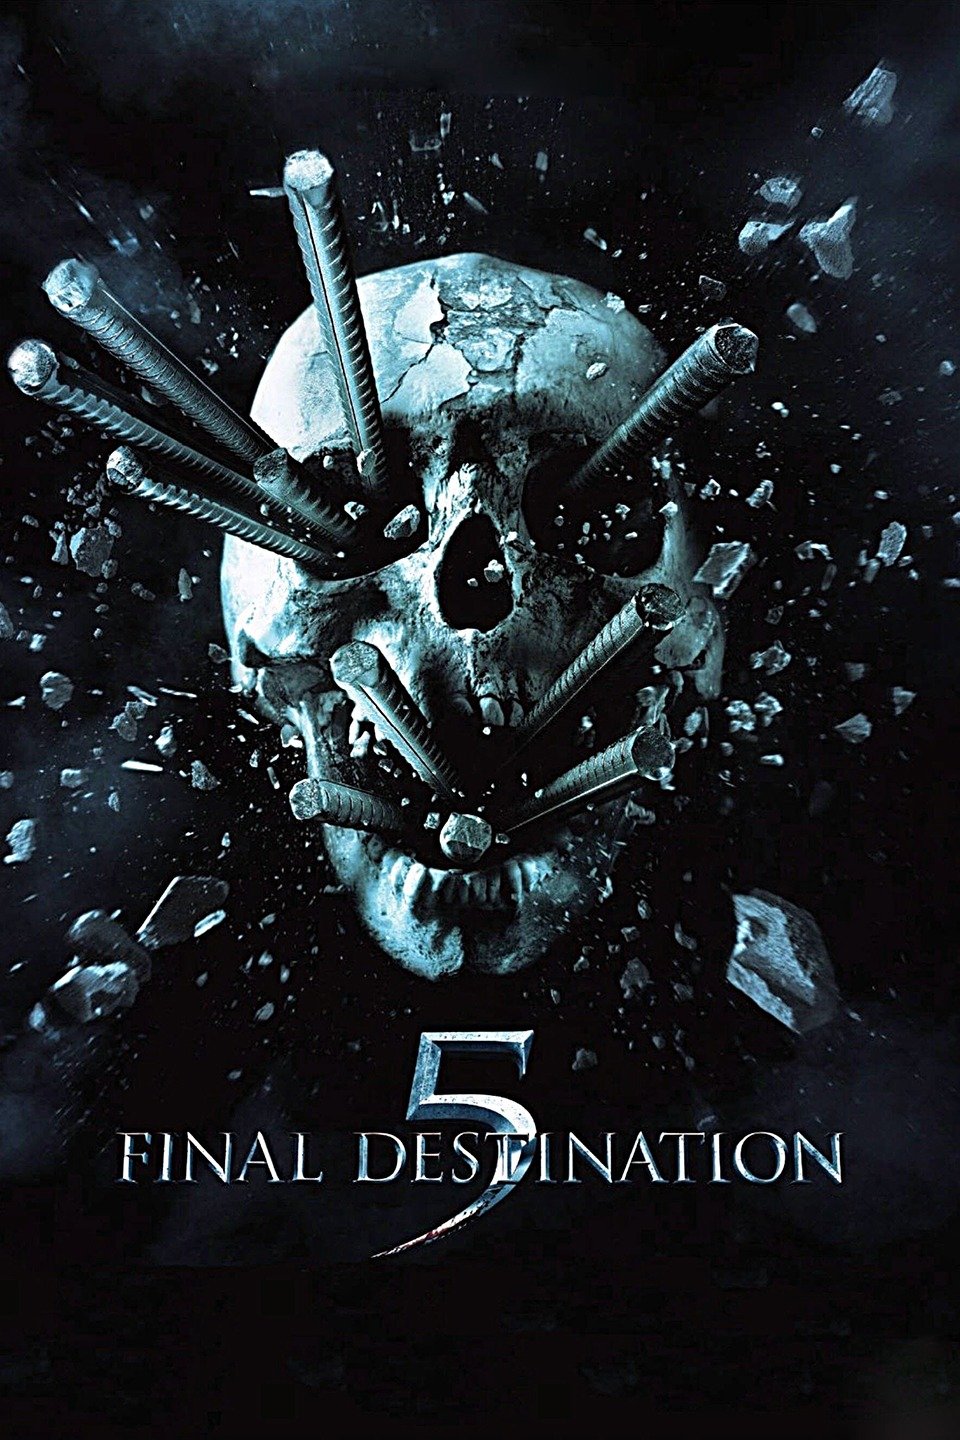 [MINI Super-HQ] Final Destination 5 (2011) ไฟนอล เดสติเนชั่น โกงตายสุดขีด ภาค 5 [1080p] [พากย์ไทย 5.1 + เสียงอังกฤษ DTS] [บรรยายไทย + อังกฤษ] [เสียงไทย + ซับไทย] [ONE2UP]